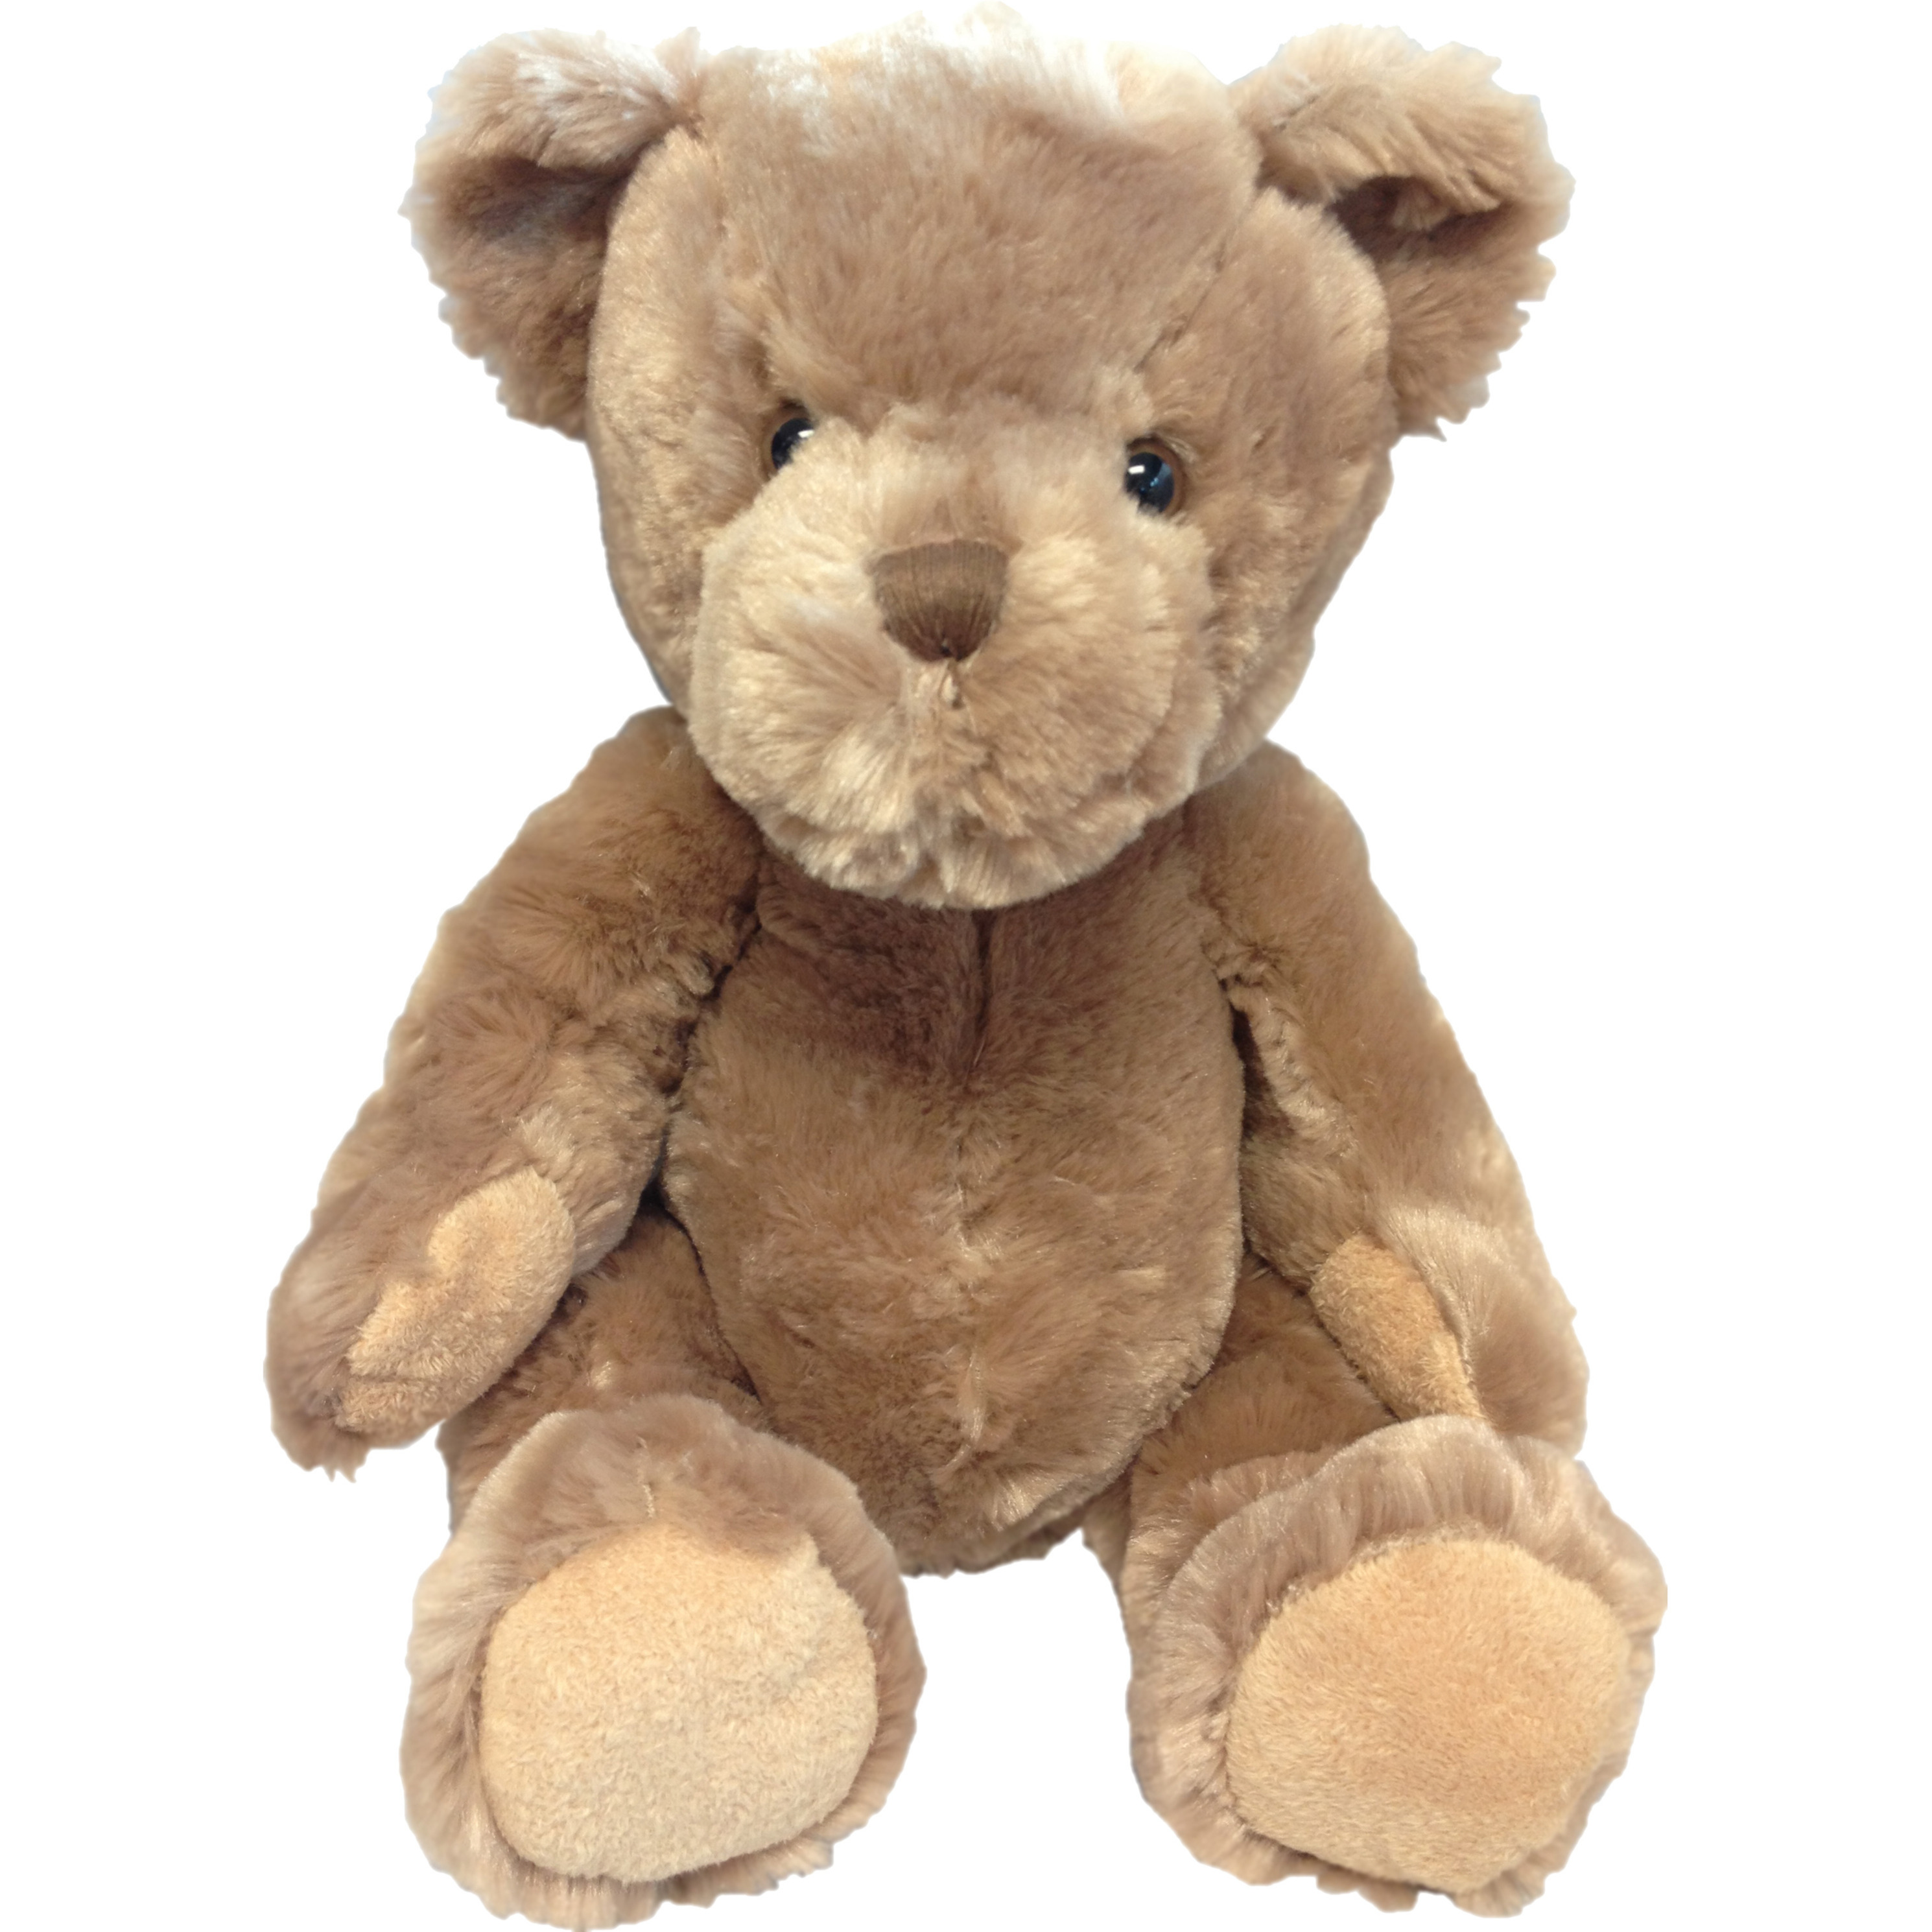 Pluche knuffel dieren teddy beer bruin 39 cm